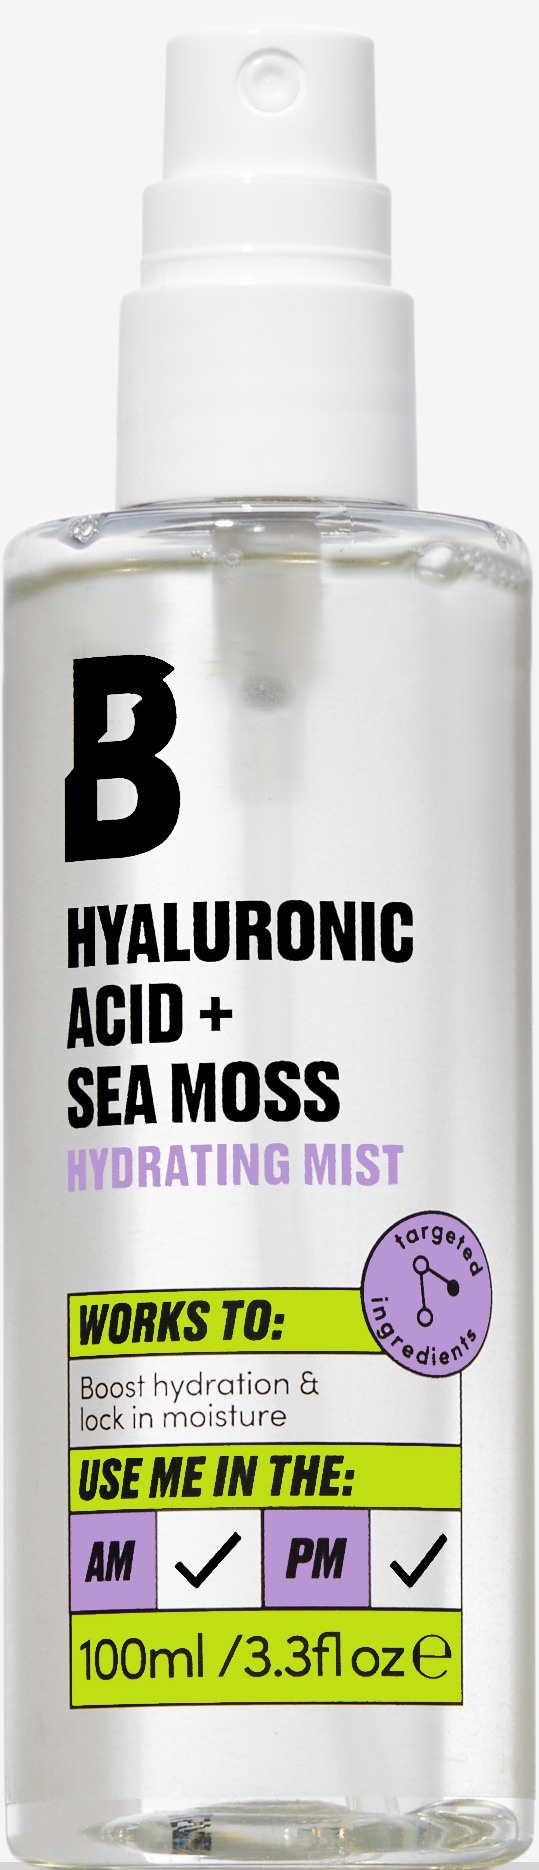 Beauty Bay Hyaluronic Acid + Sea Moss Hydrating Face Mist